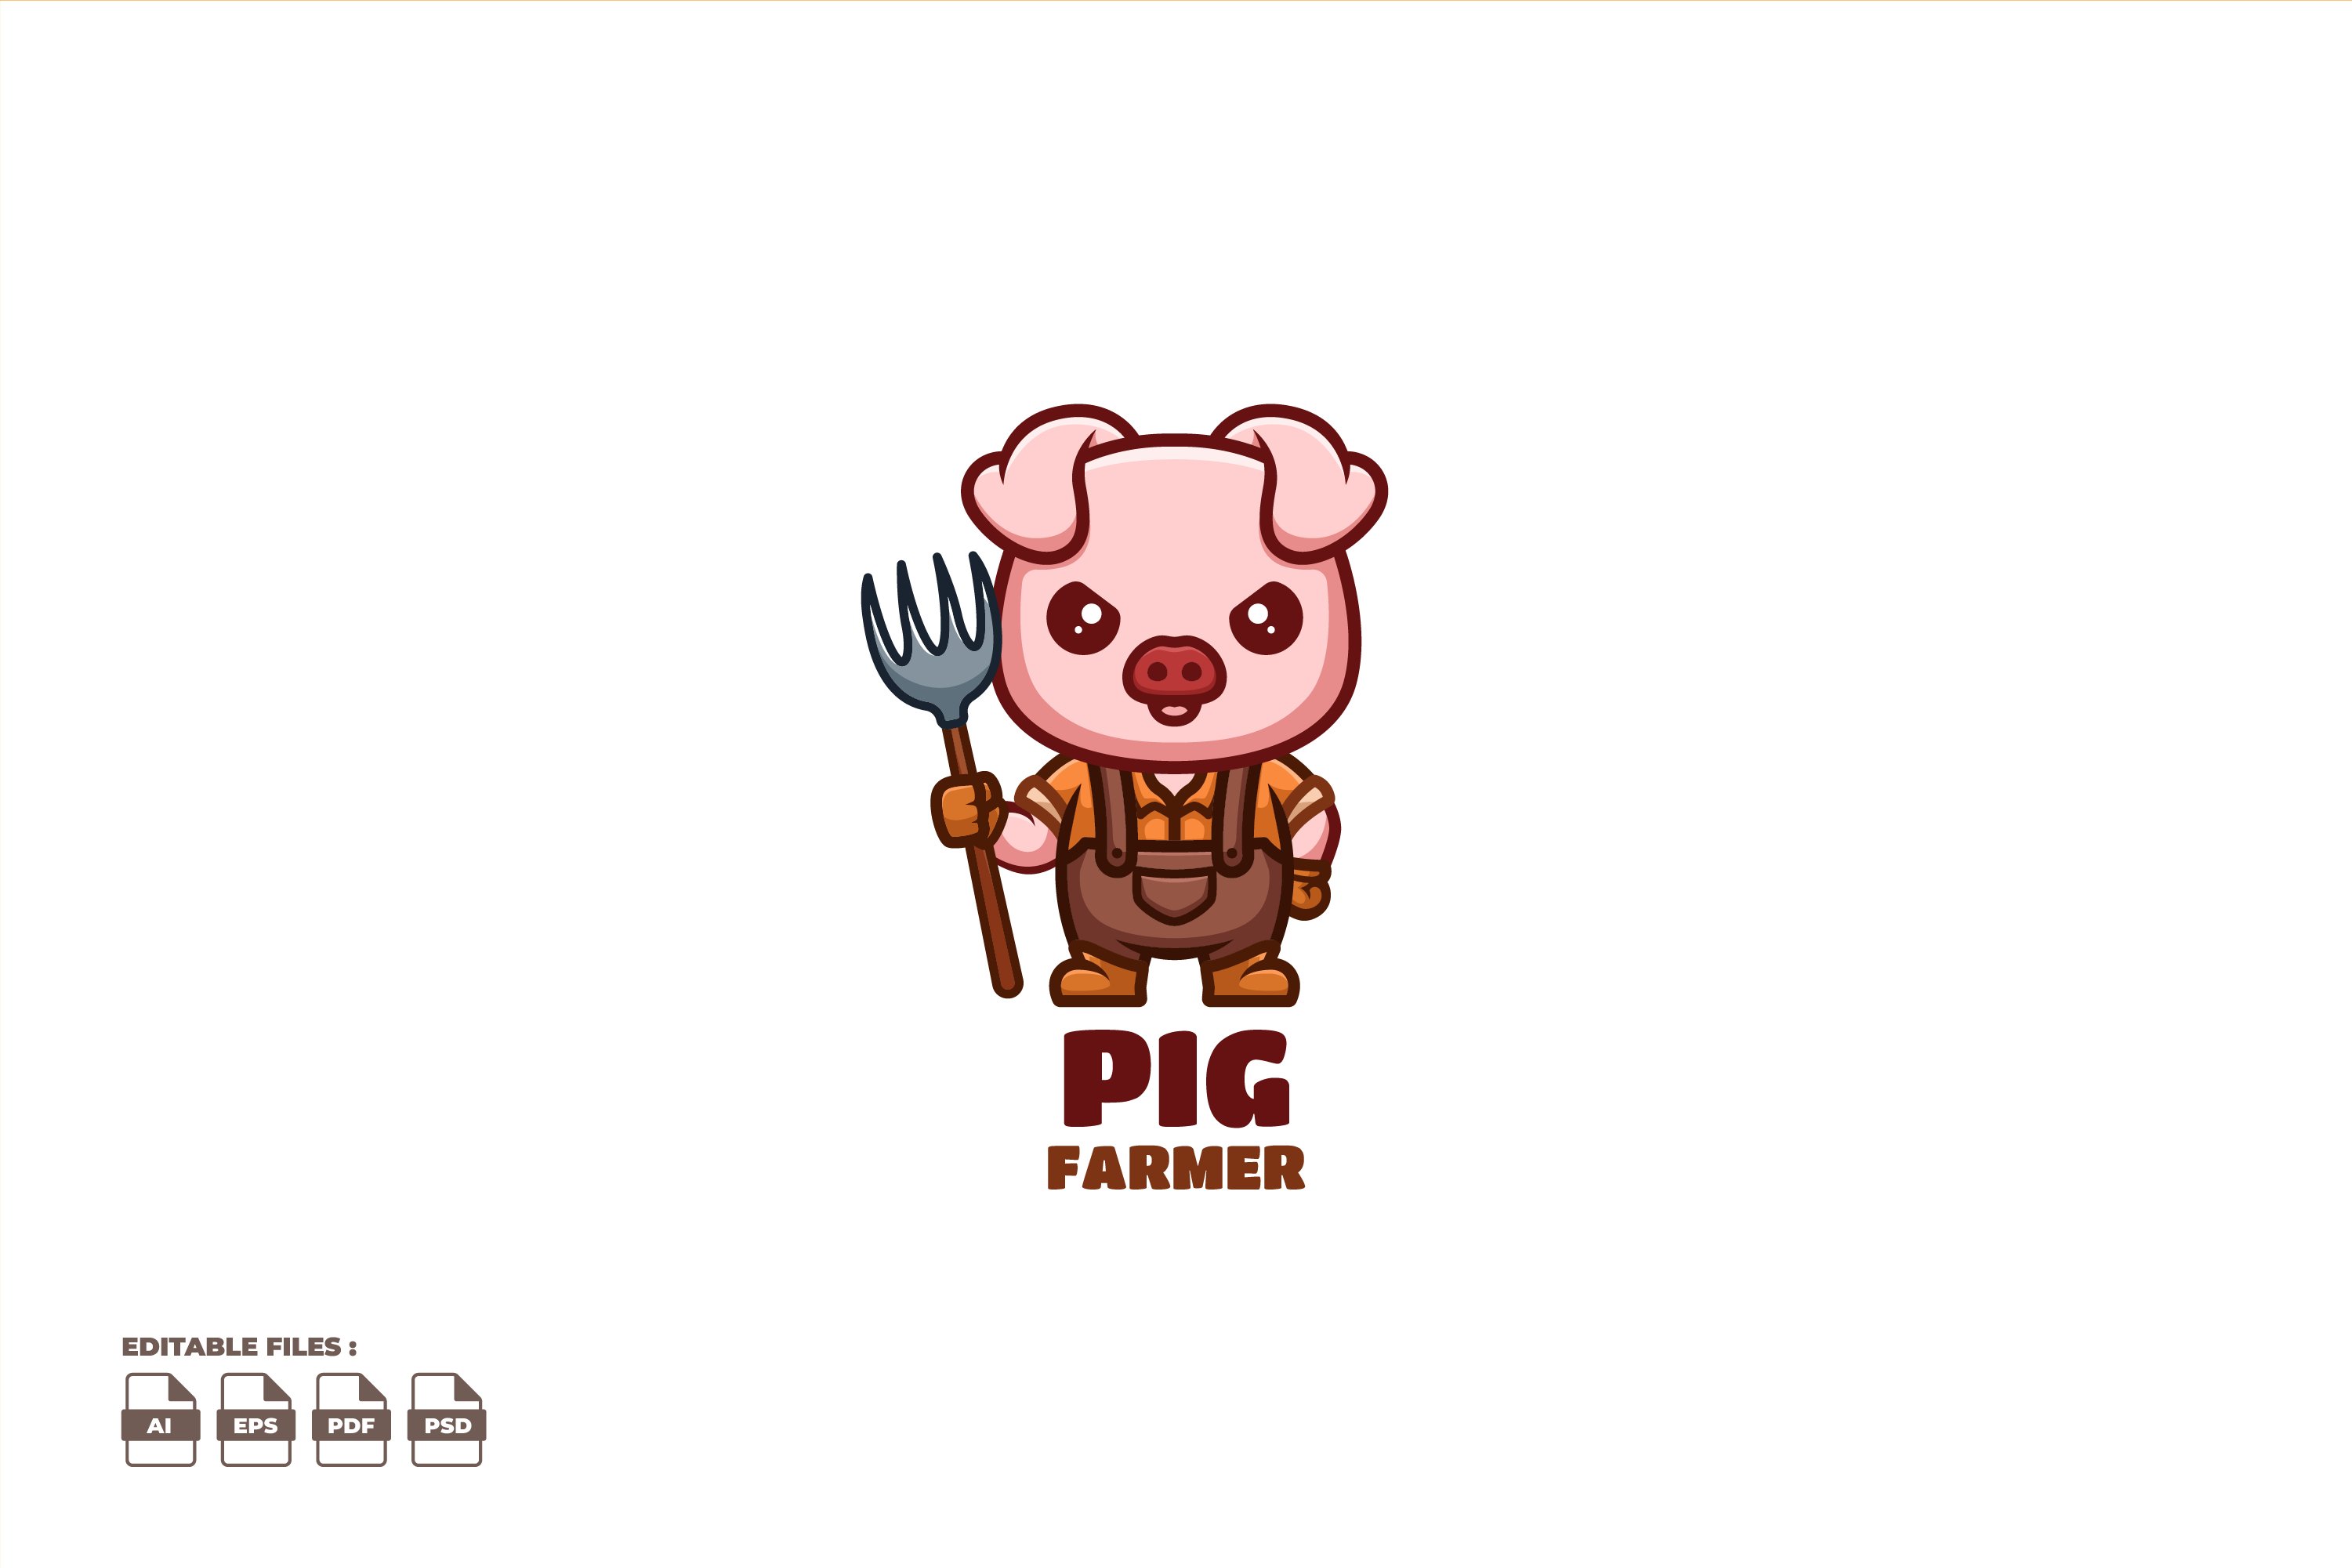 Farmer Pig Cute Mascot Logo cover image.